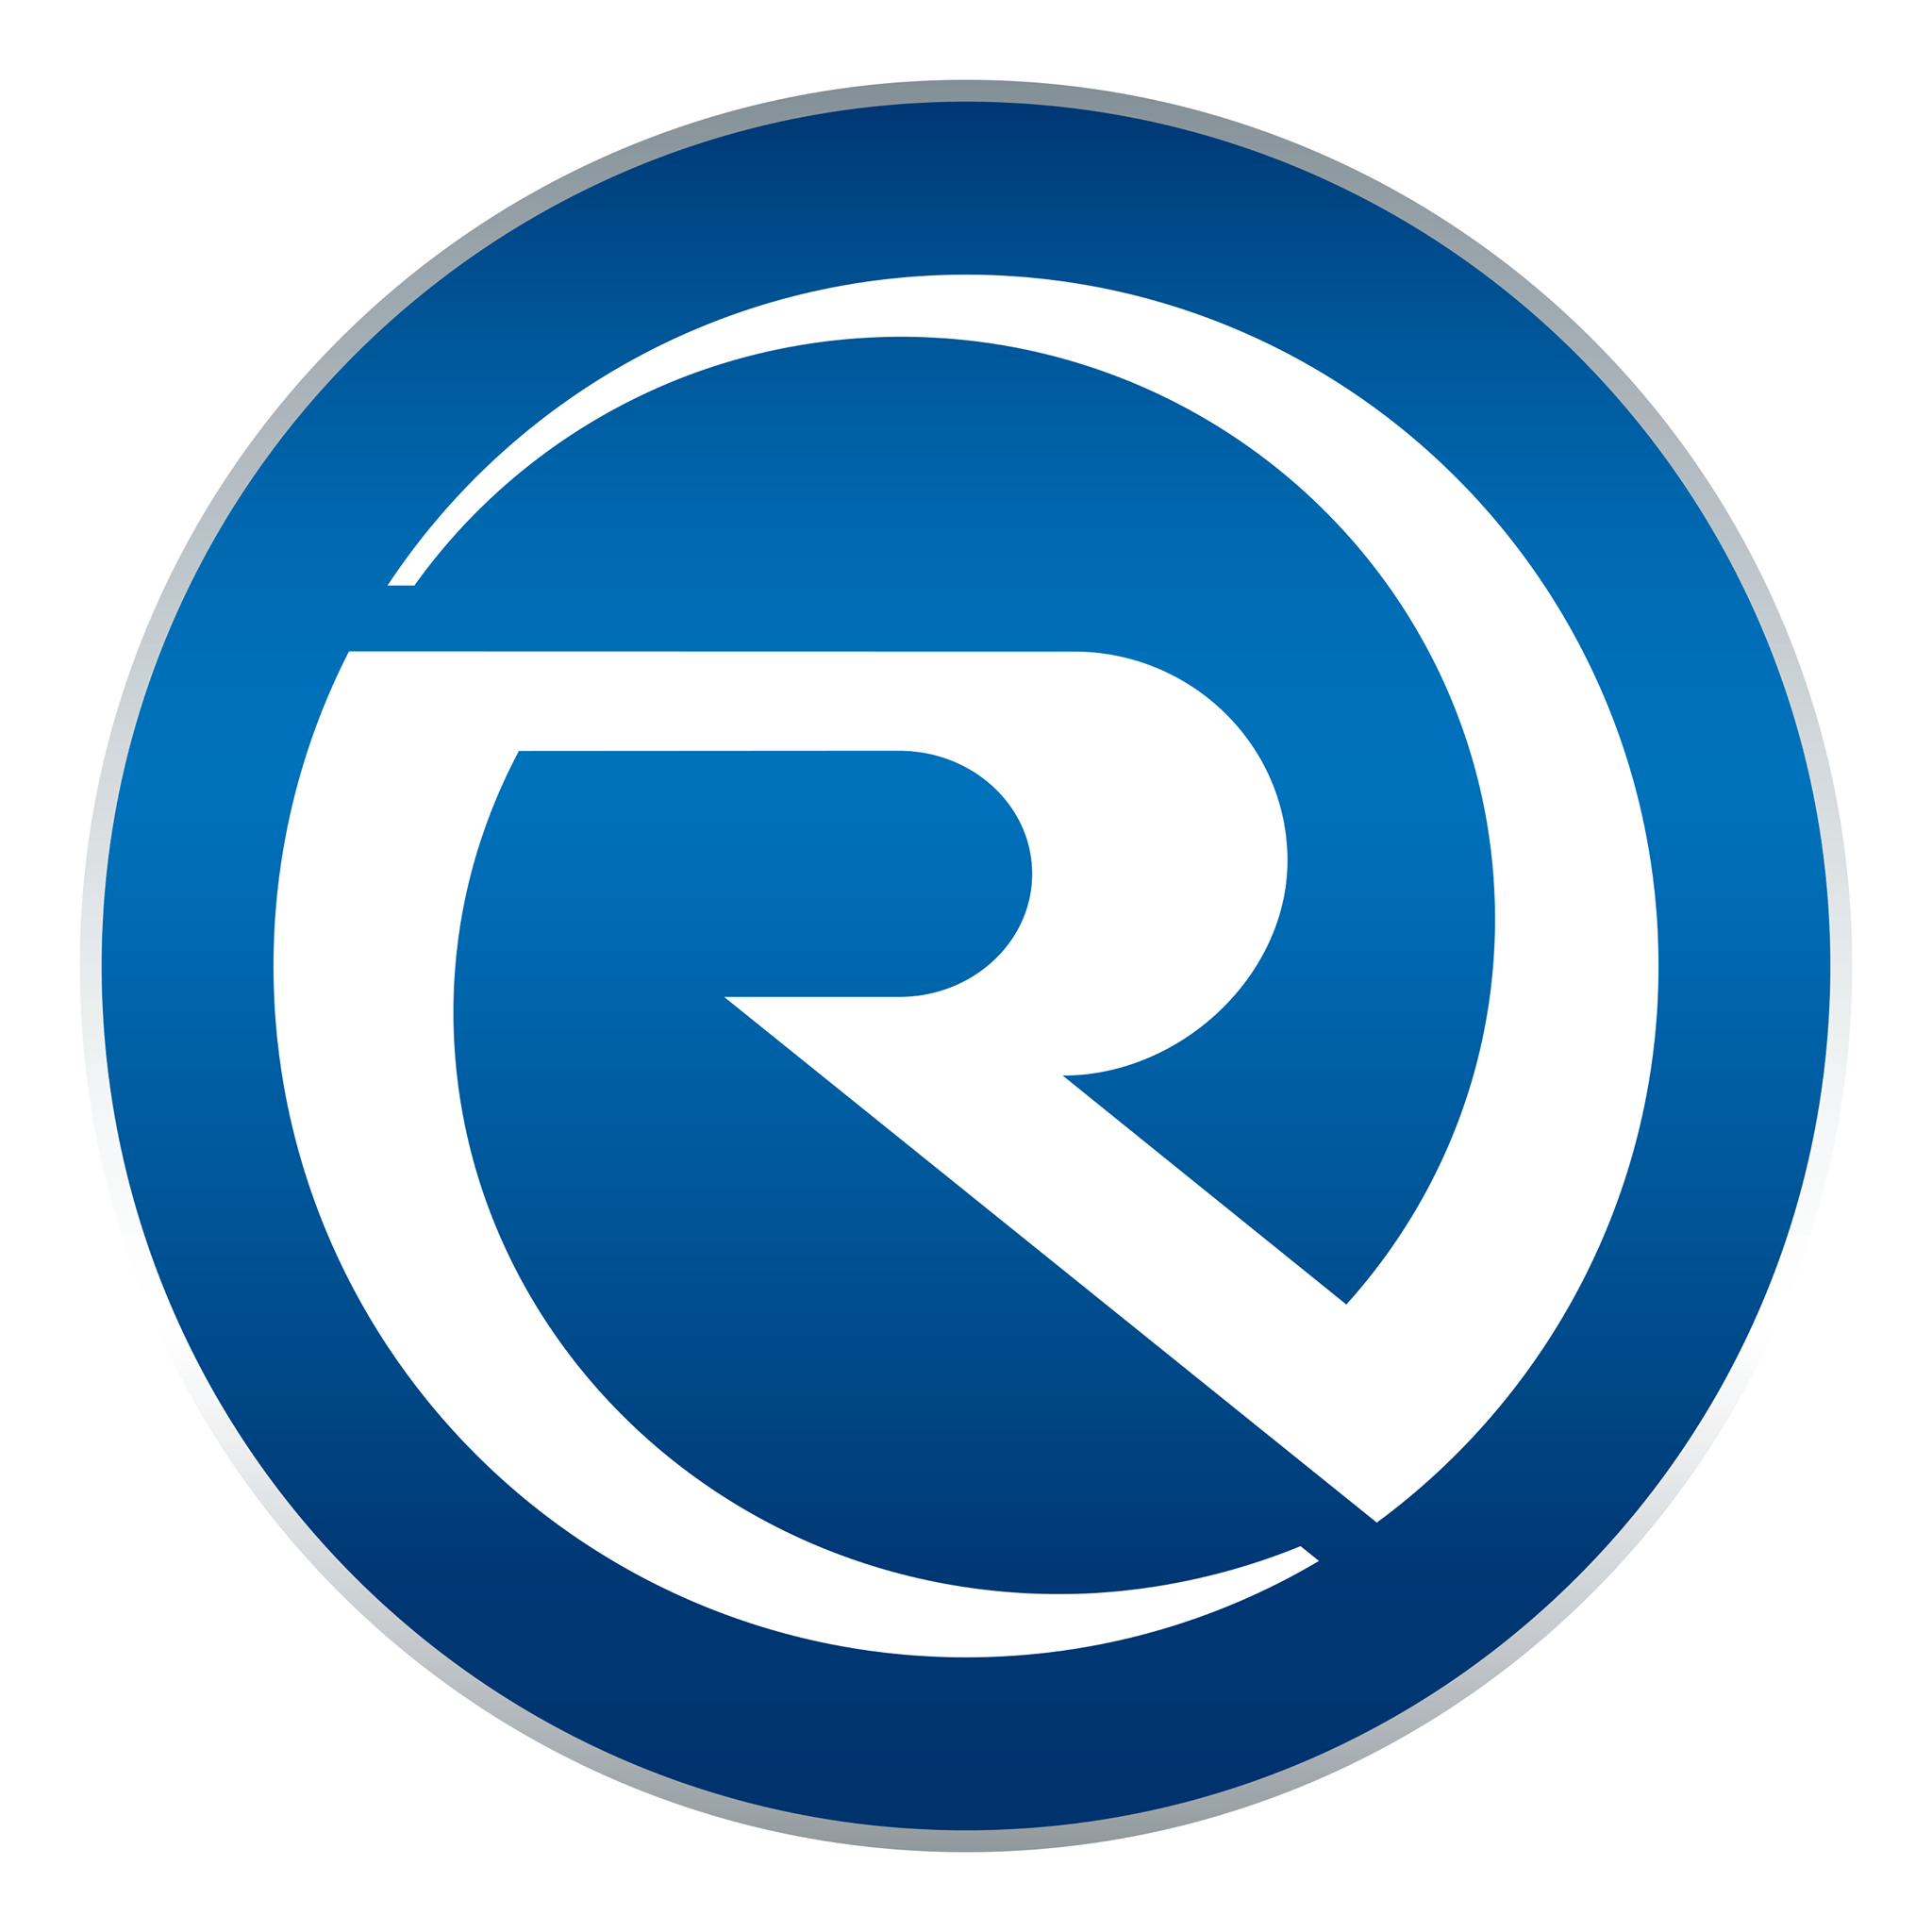 Riviera logo